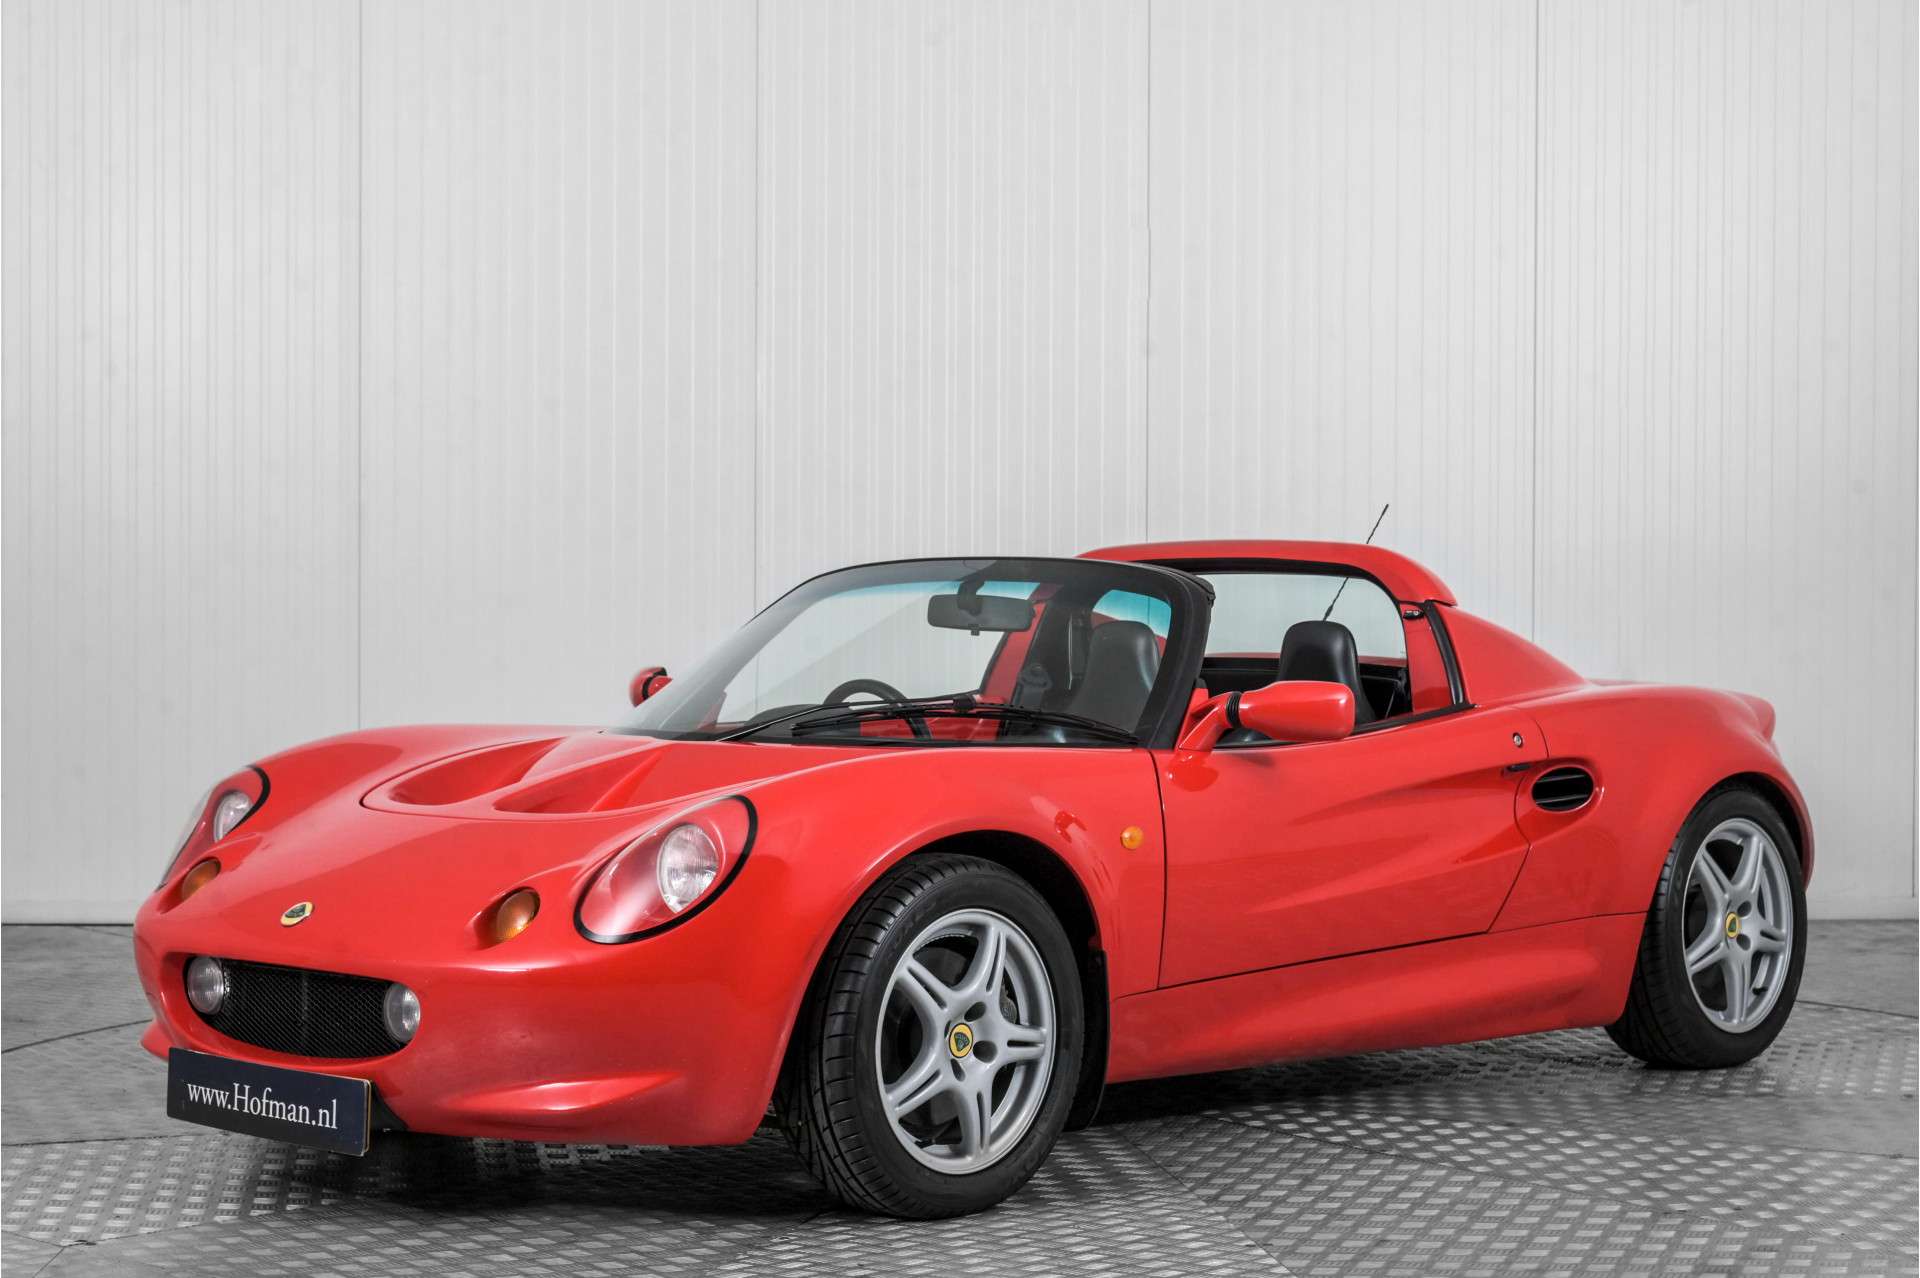 Lotus Elise Convertible in Red used in LEEK for € 26,900.-